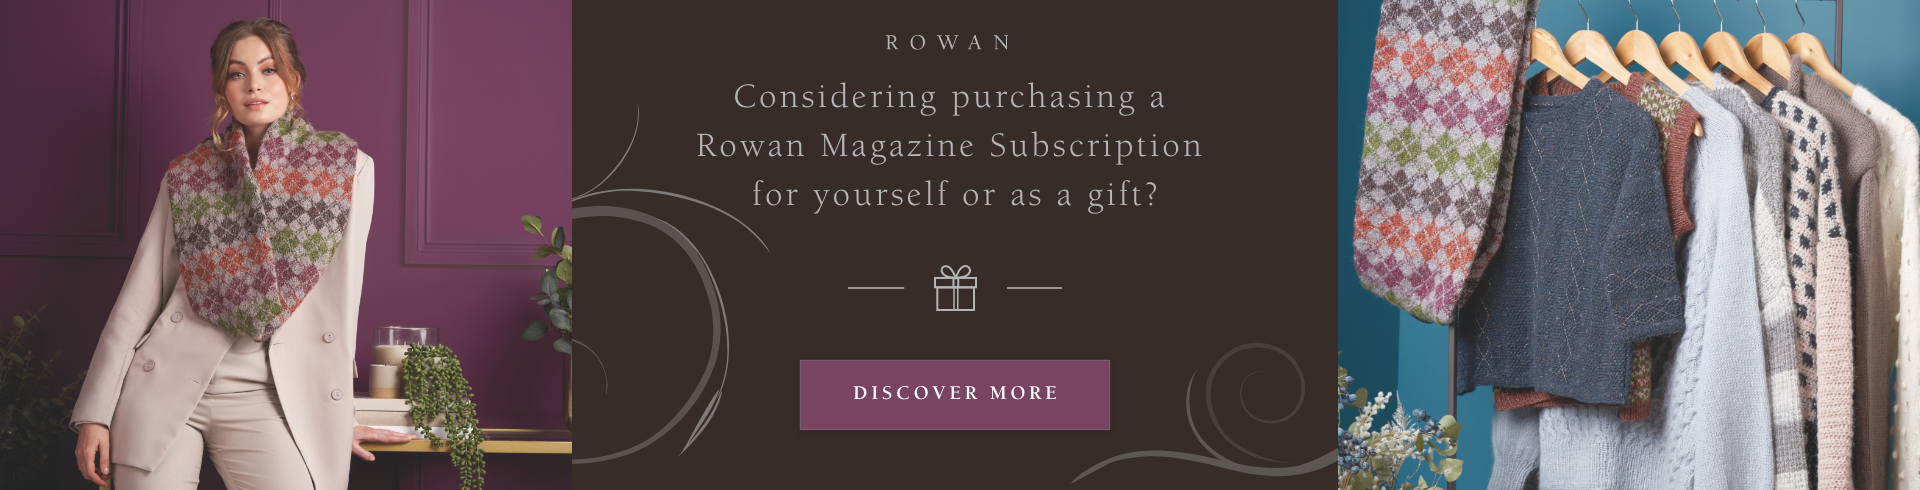 Rowan Subscription Promo Mag 70_1